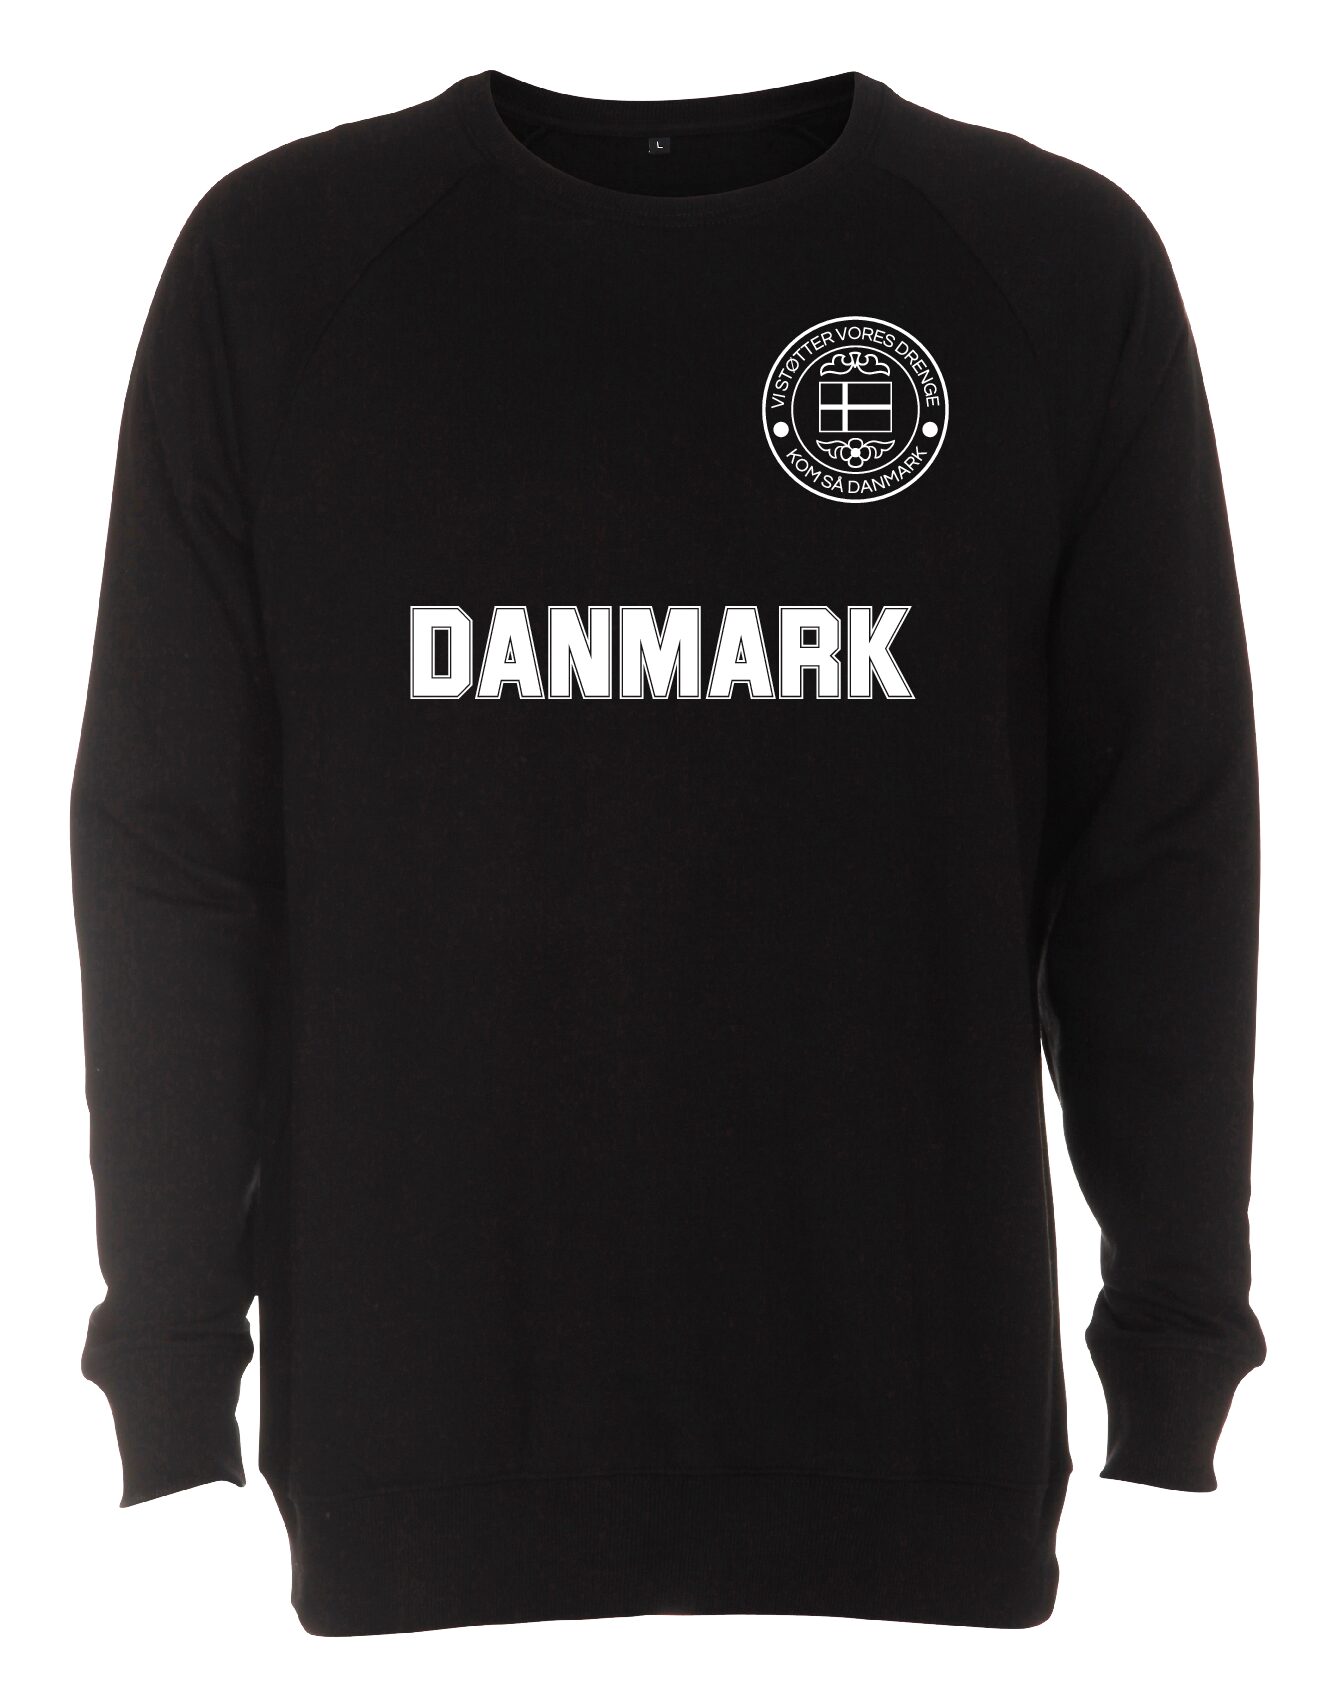 Sweatshirt sort Danmark 1 1 pdf